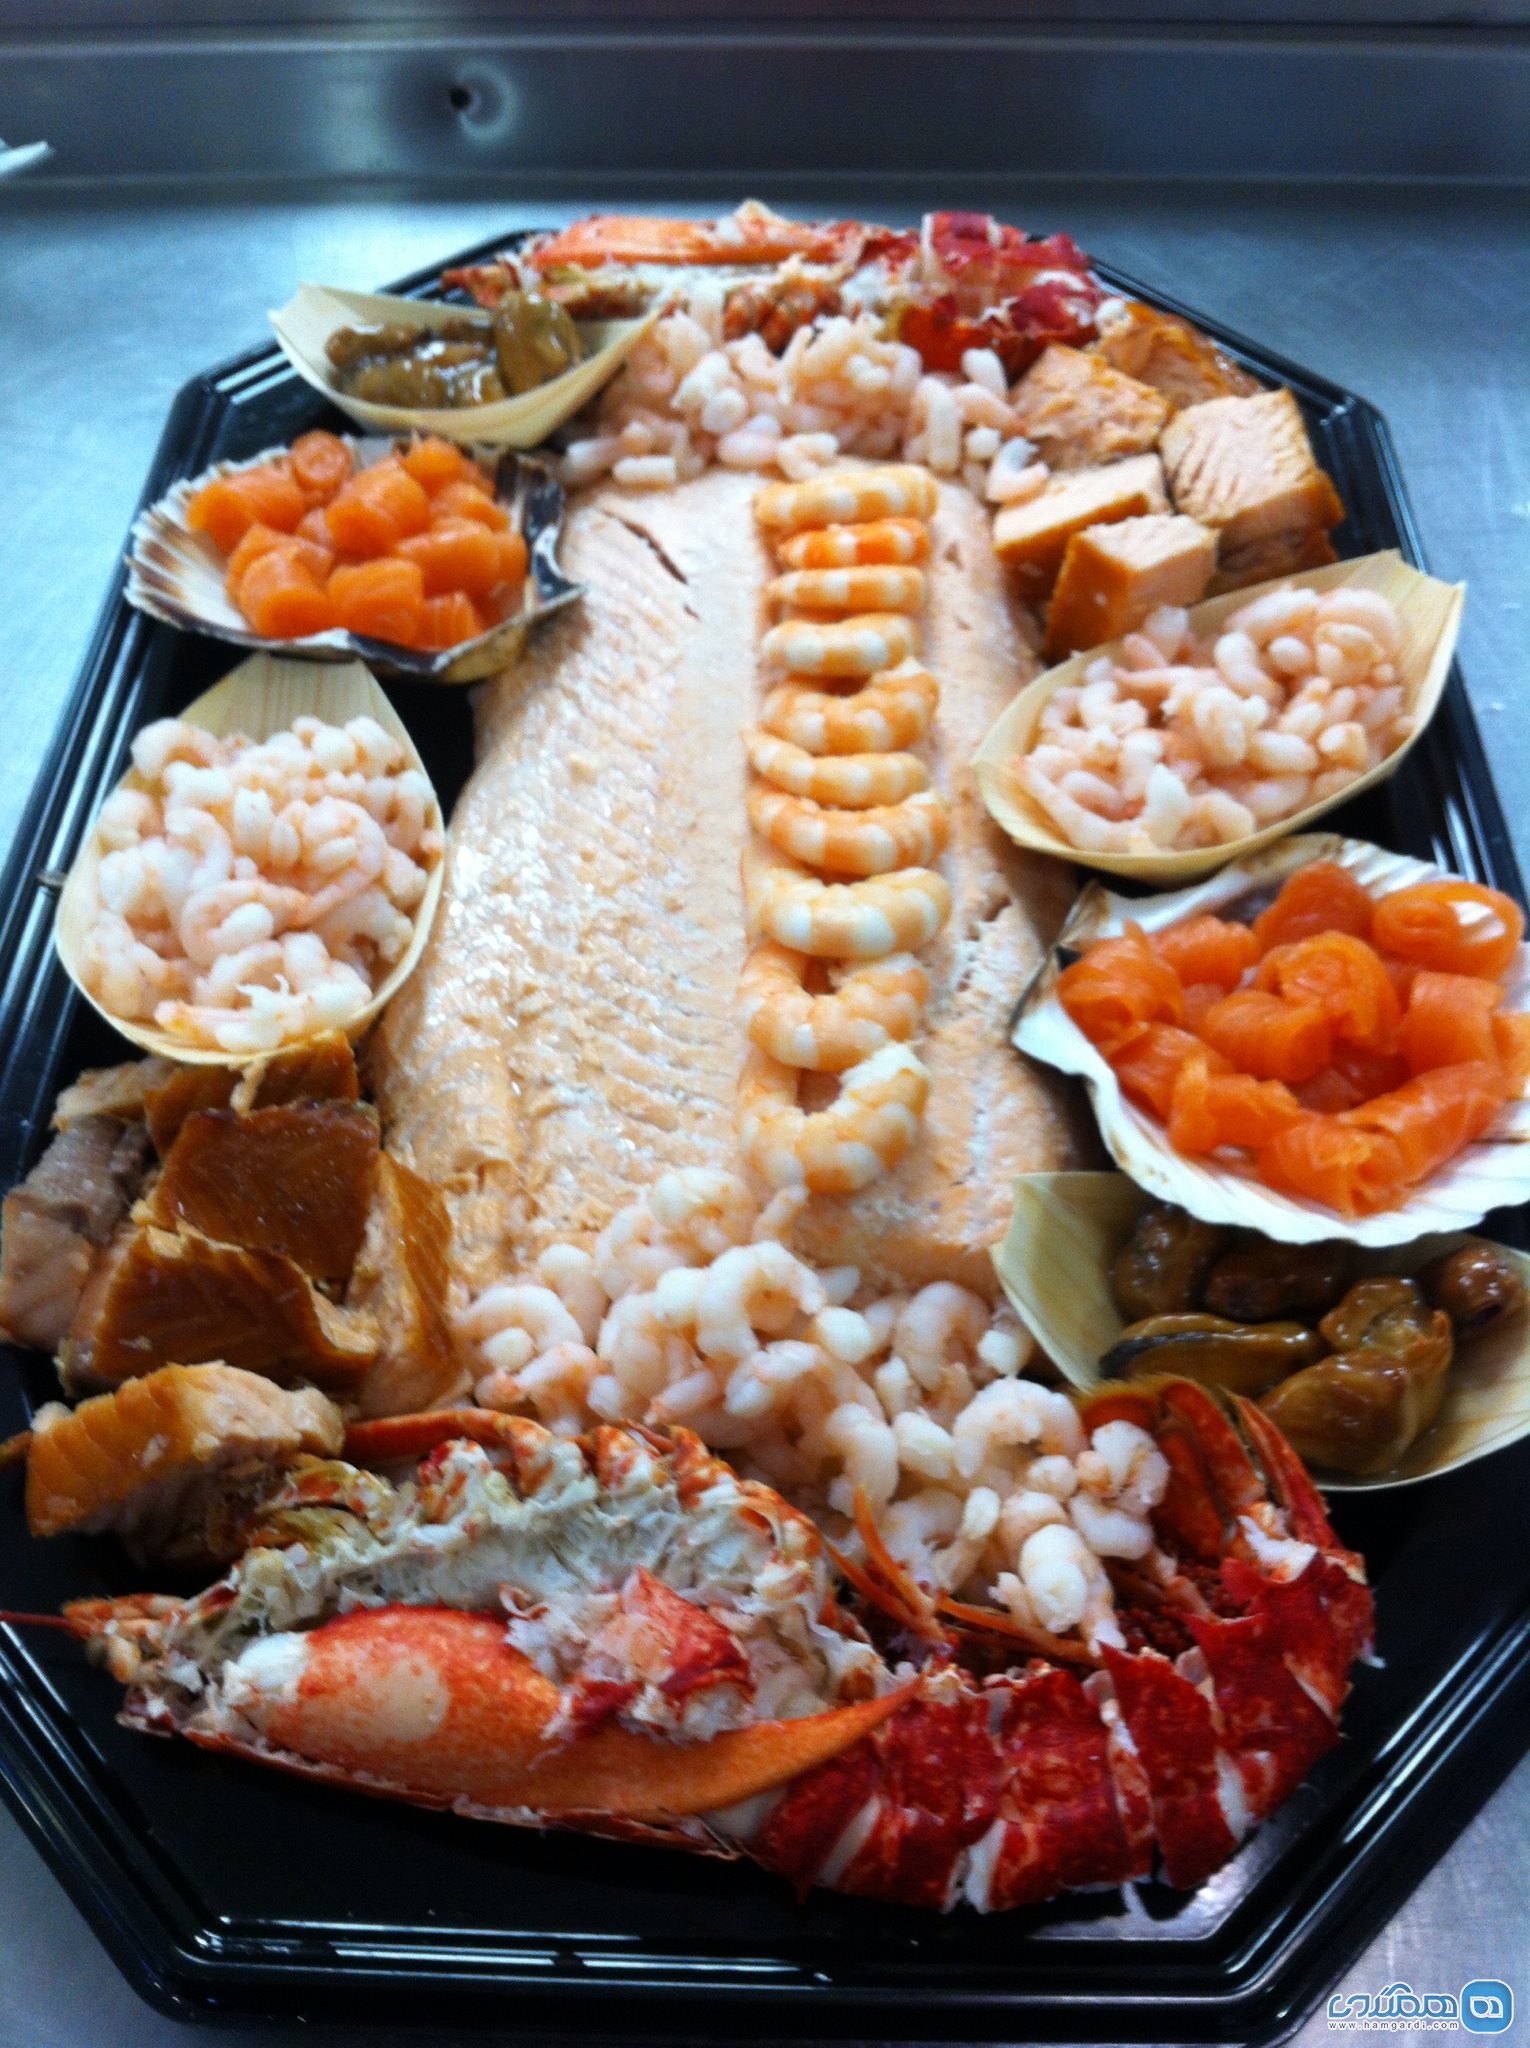 Latimer’s Seafood Deli